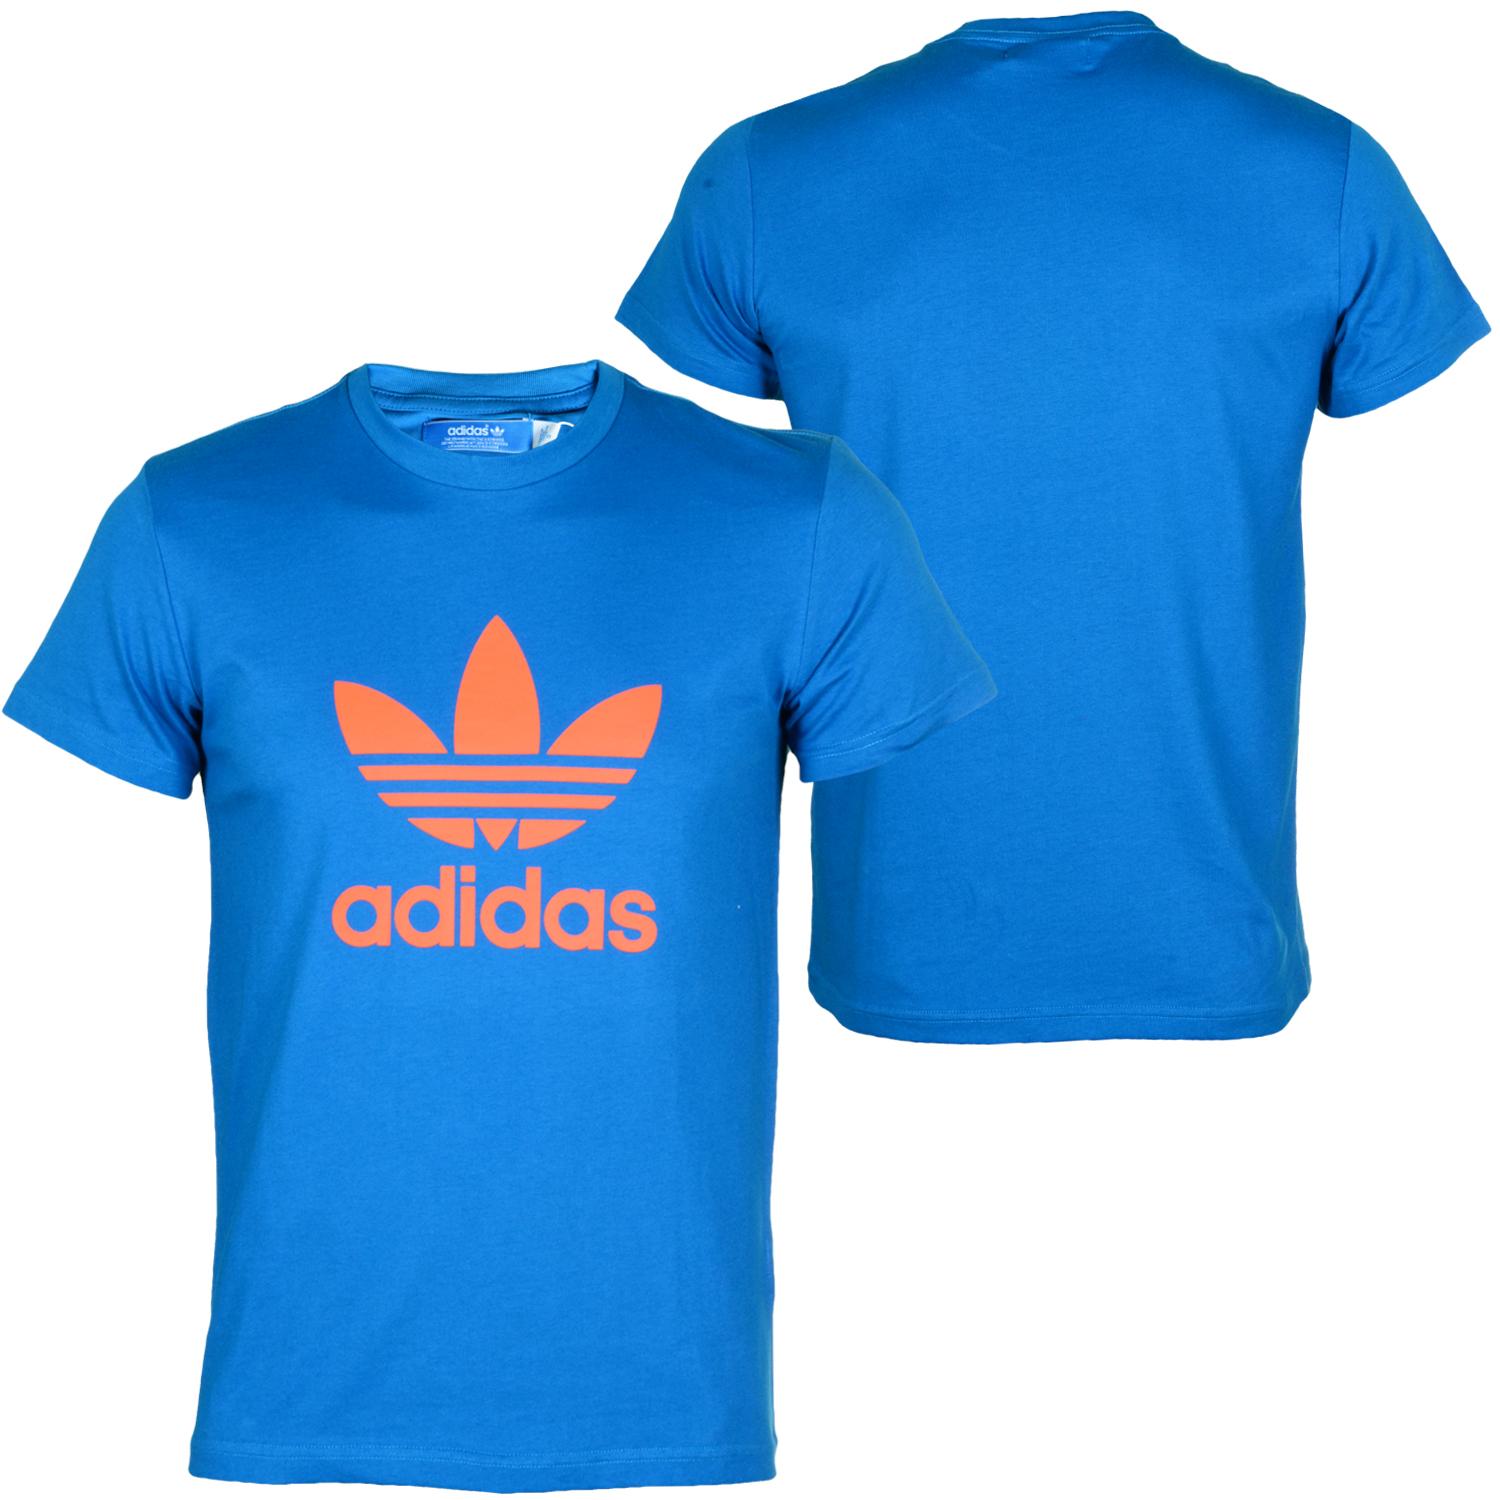 Foto Adidas Adi Trefoil T-shirt Azul Naranja foto 48830